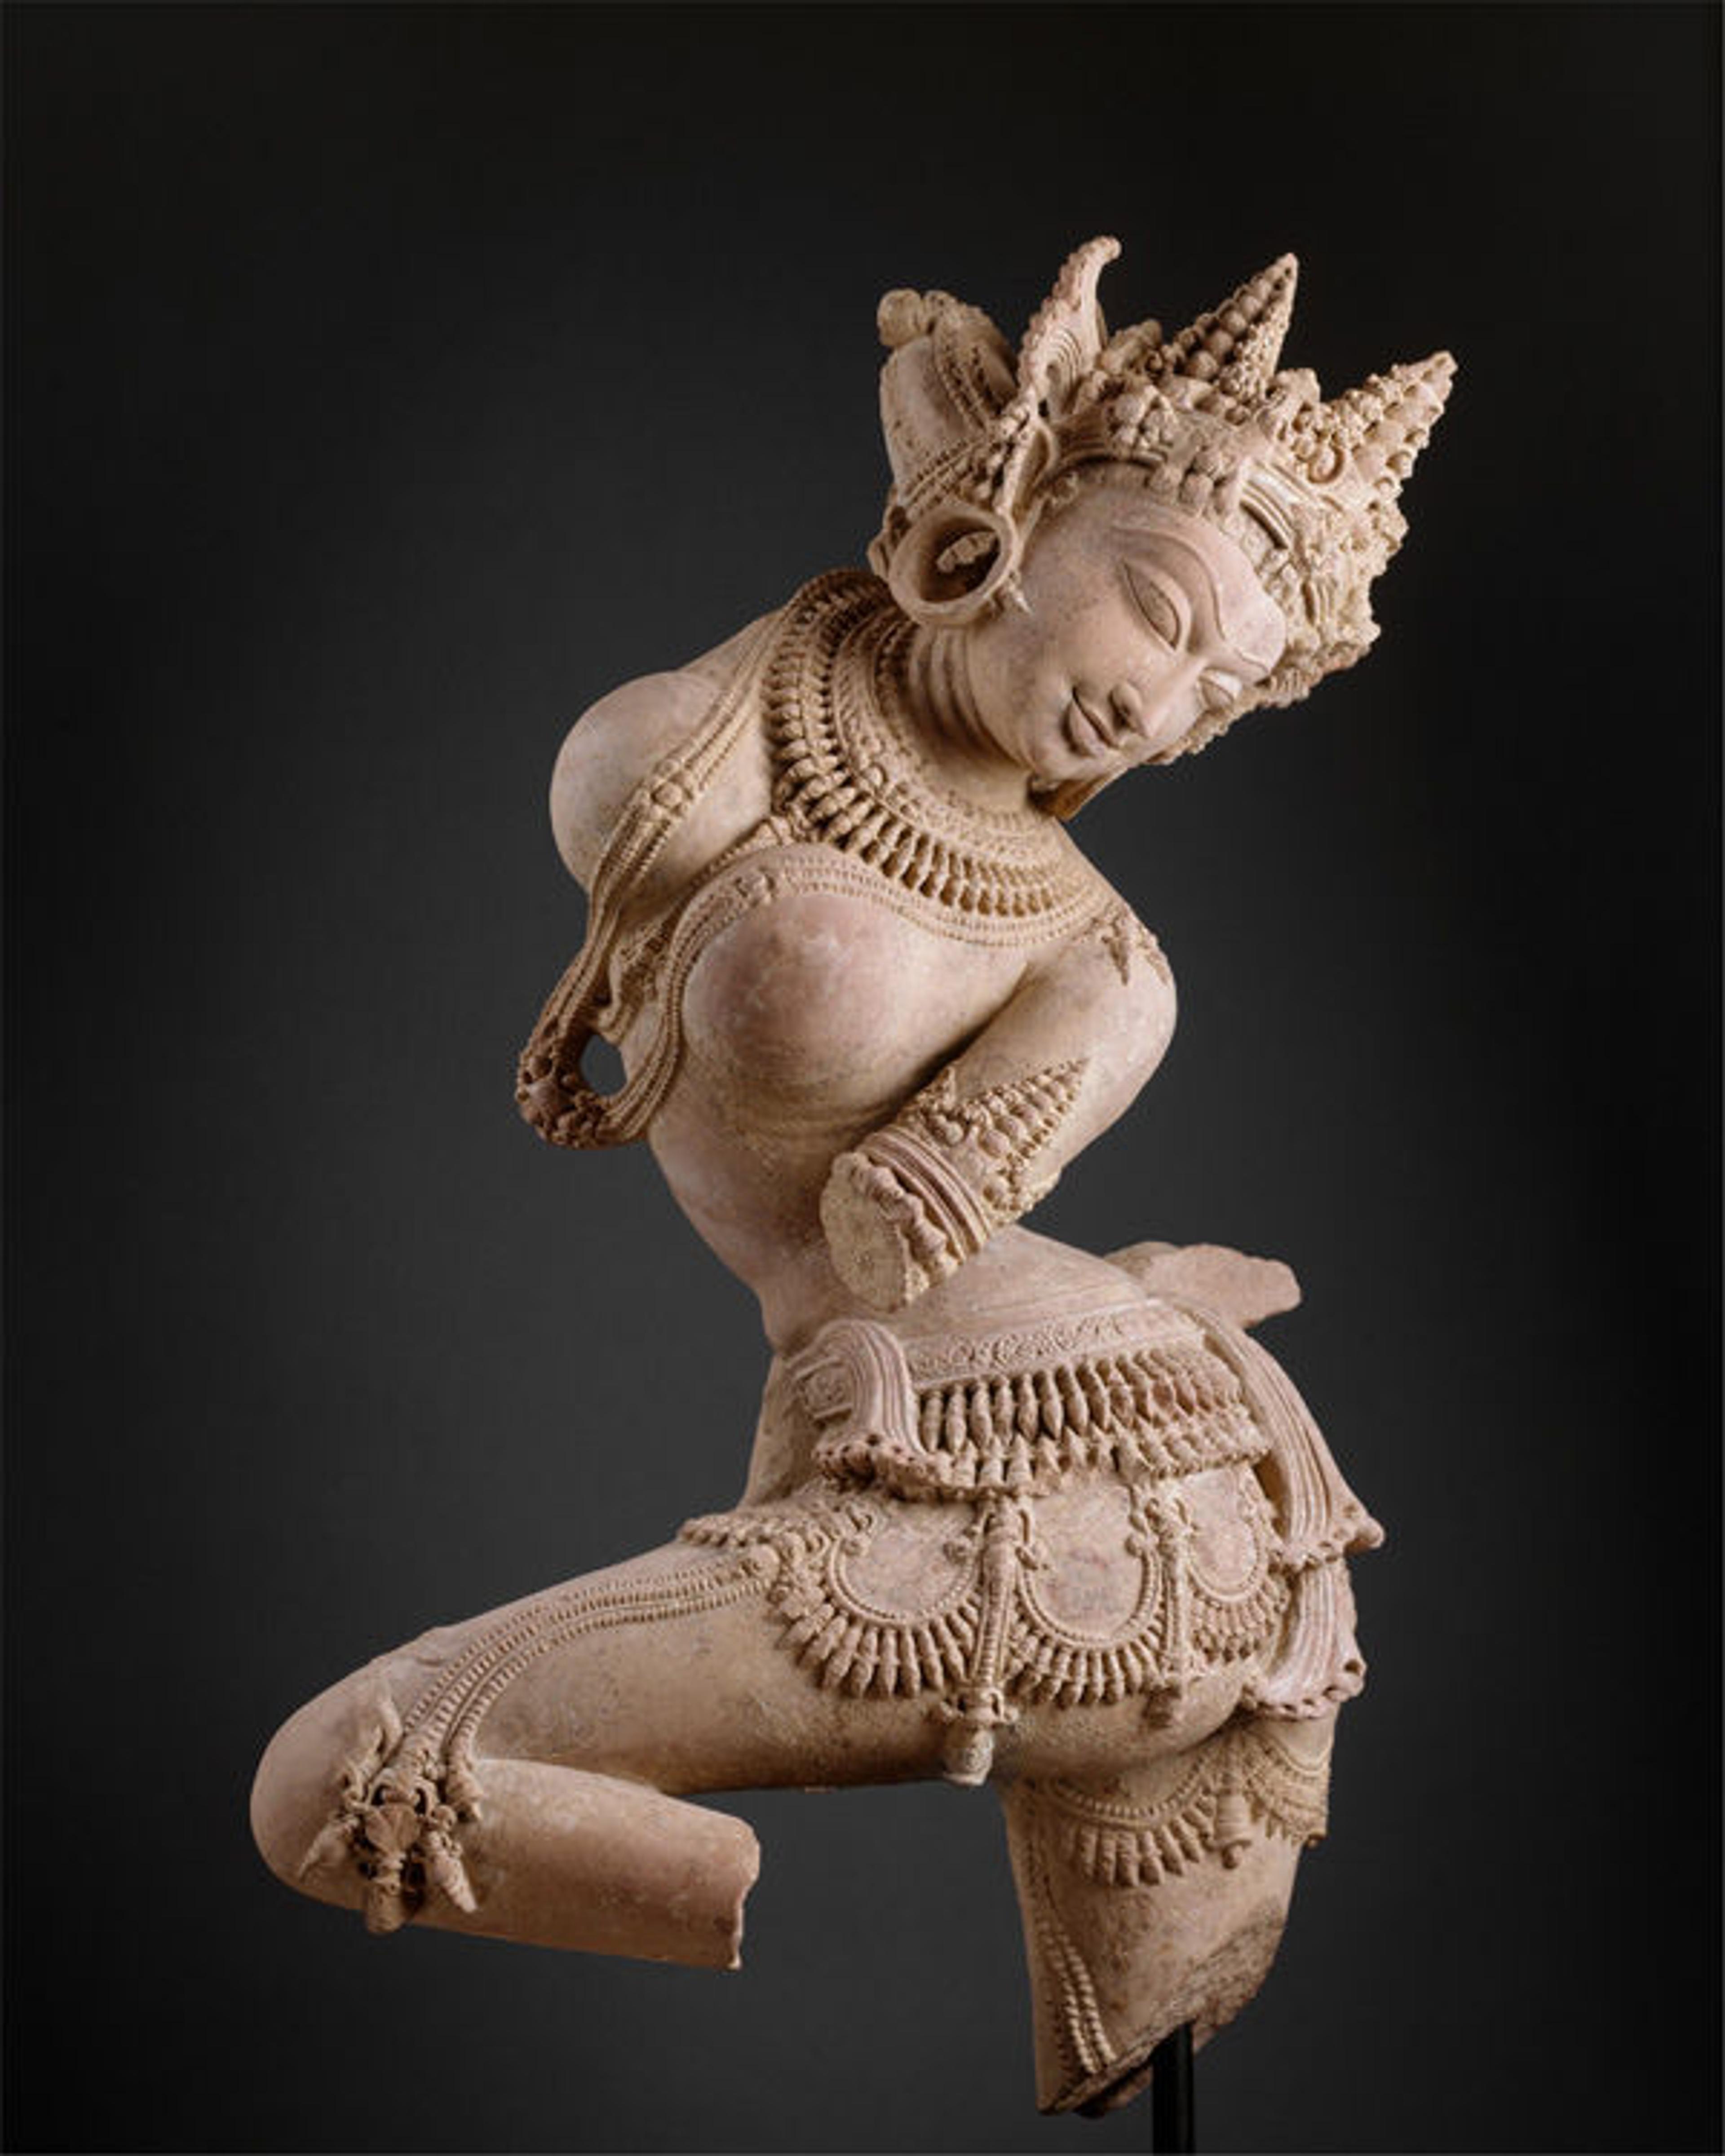 Dancing Celestial Deity (Devata), early 12th century | India (Uttar Pradesh) | The Metropolitan Museum of Art, New York, Promised Gift of Florence and Herbert Irving (L.1993.88.2)